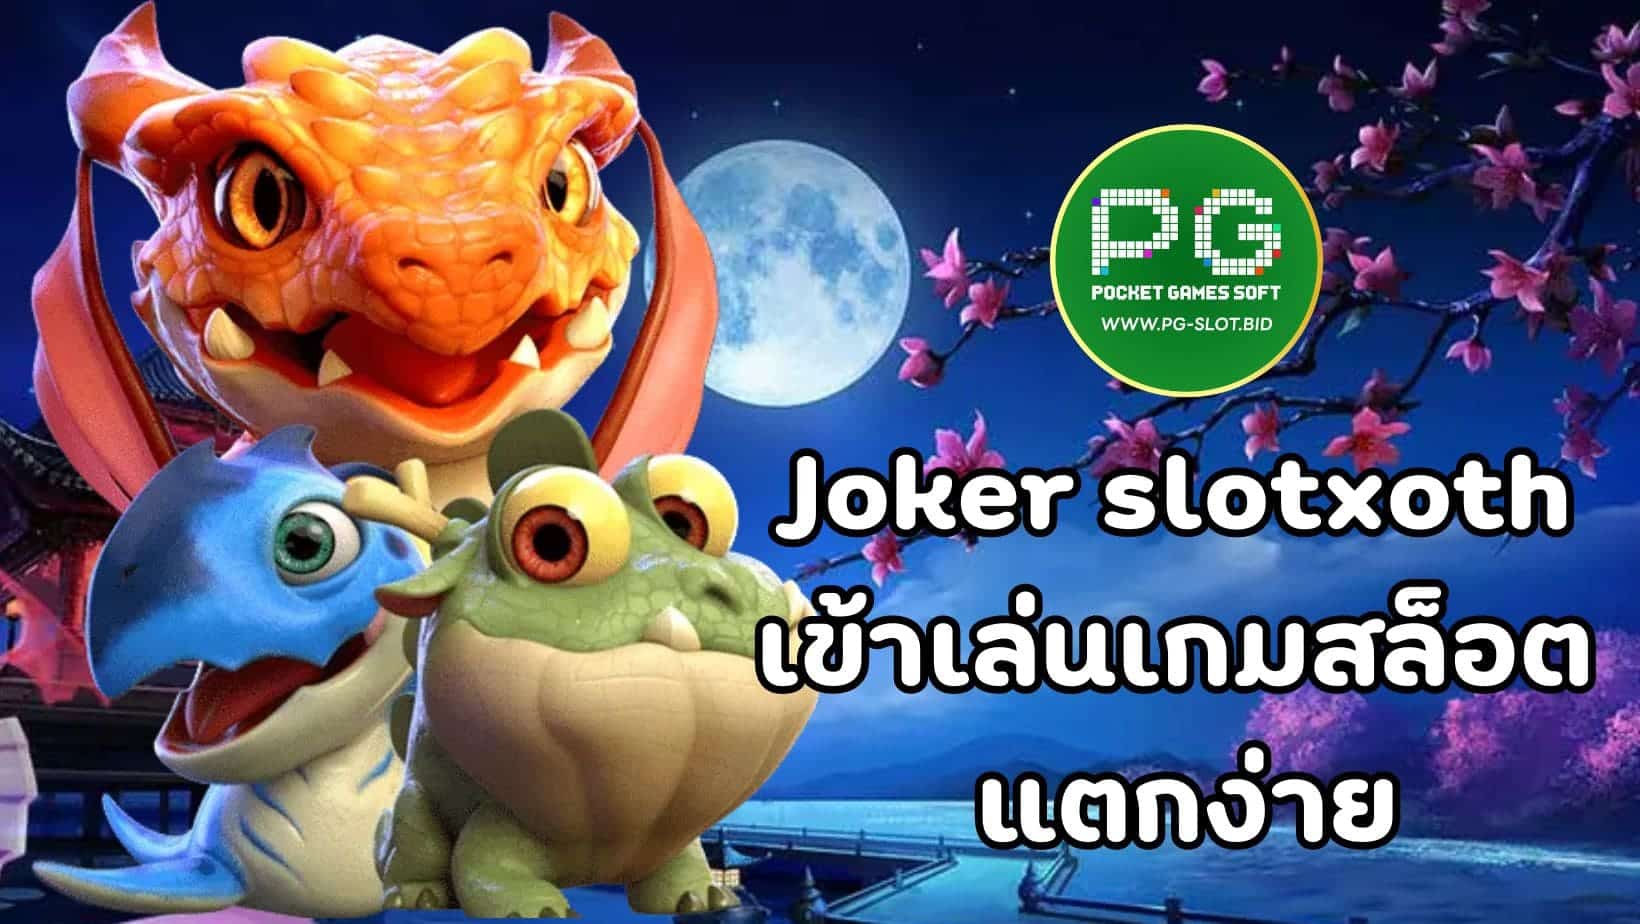 Joker slotxoth เข้าเล่นเกมสล็อต แตกง่าย